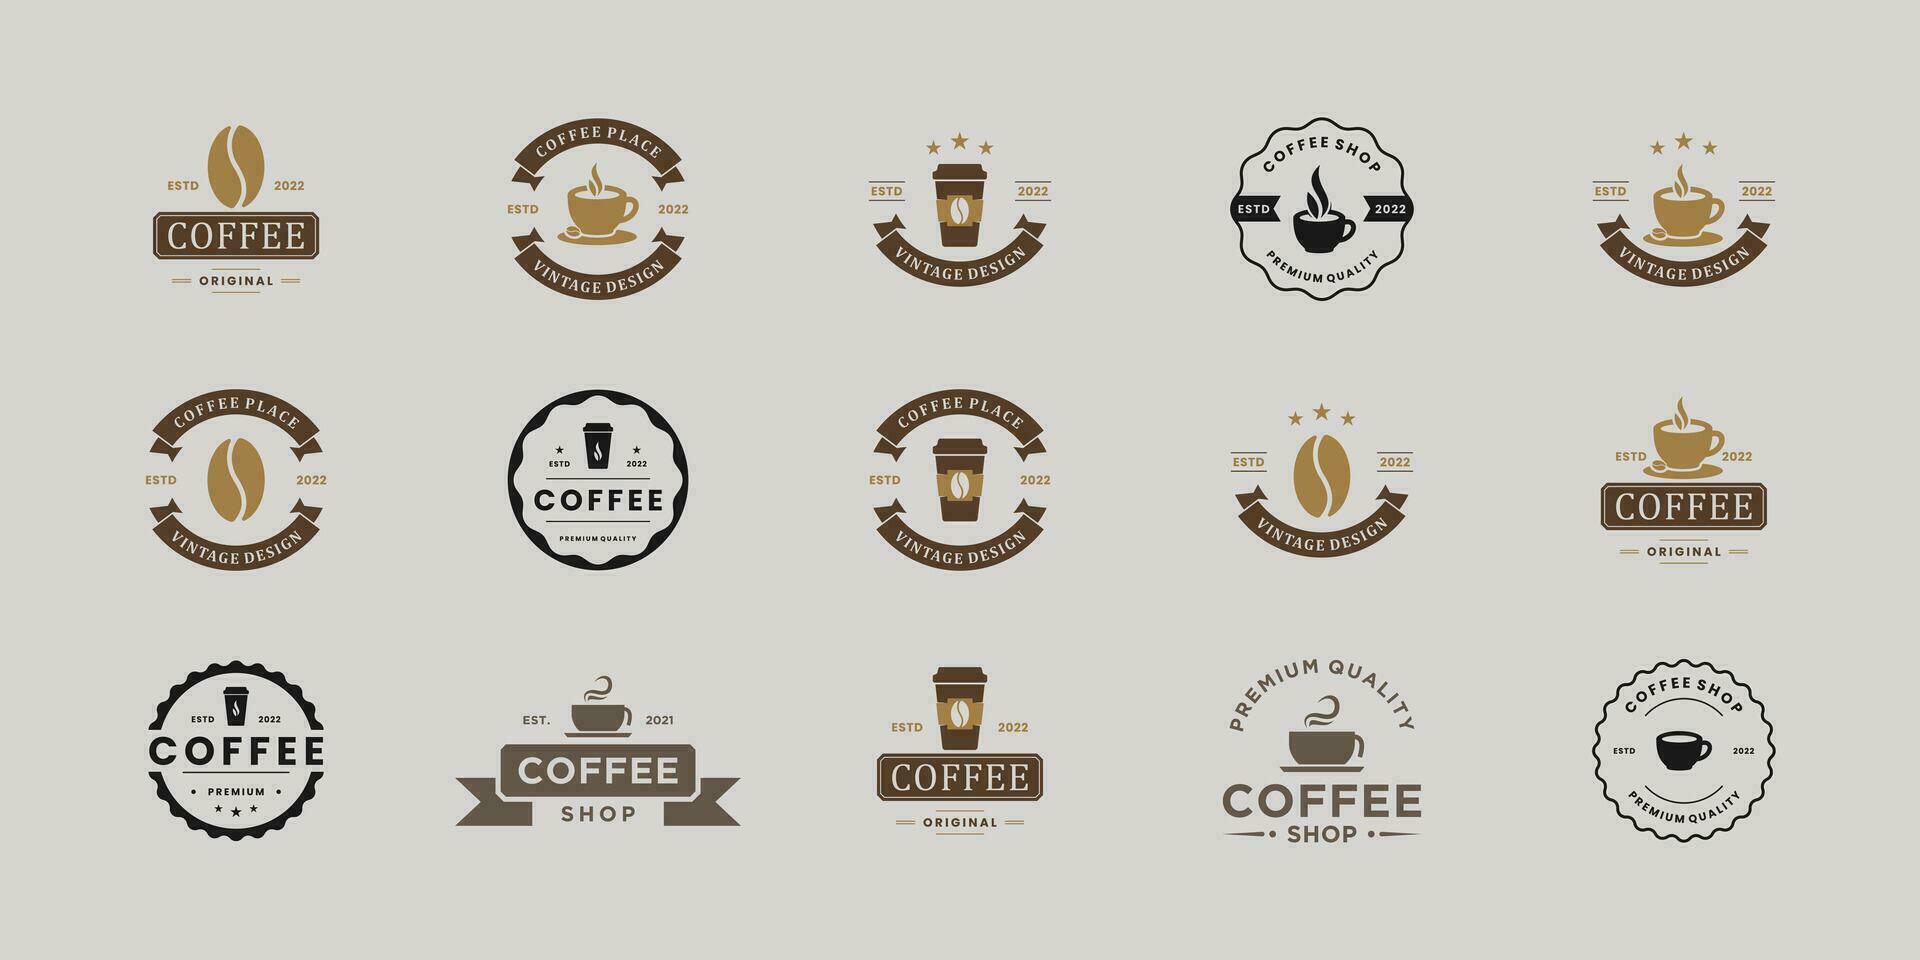 impostato di caffè emblema logo design. vettore